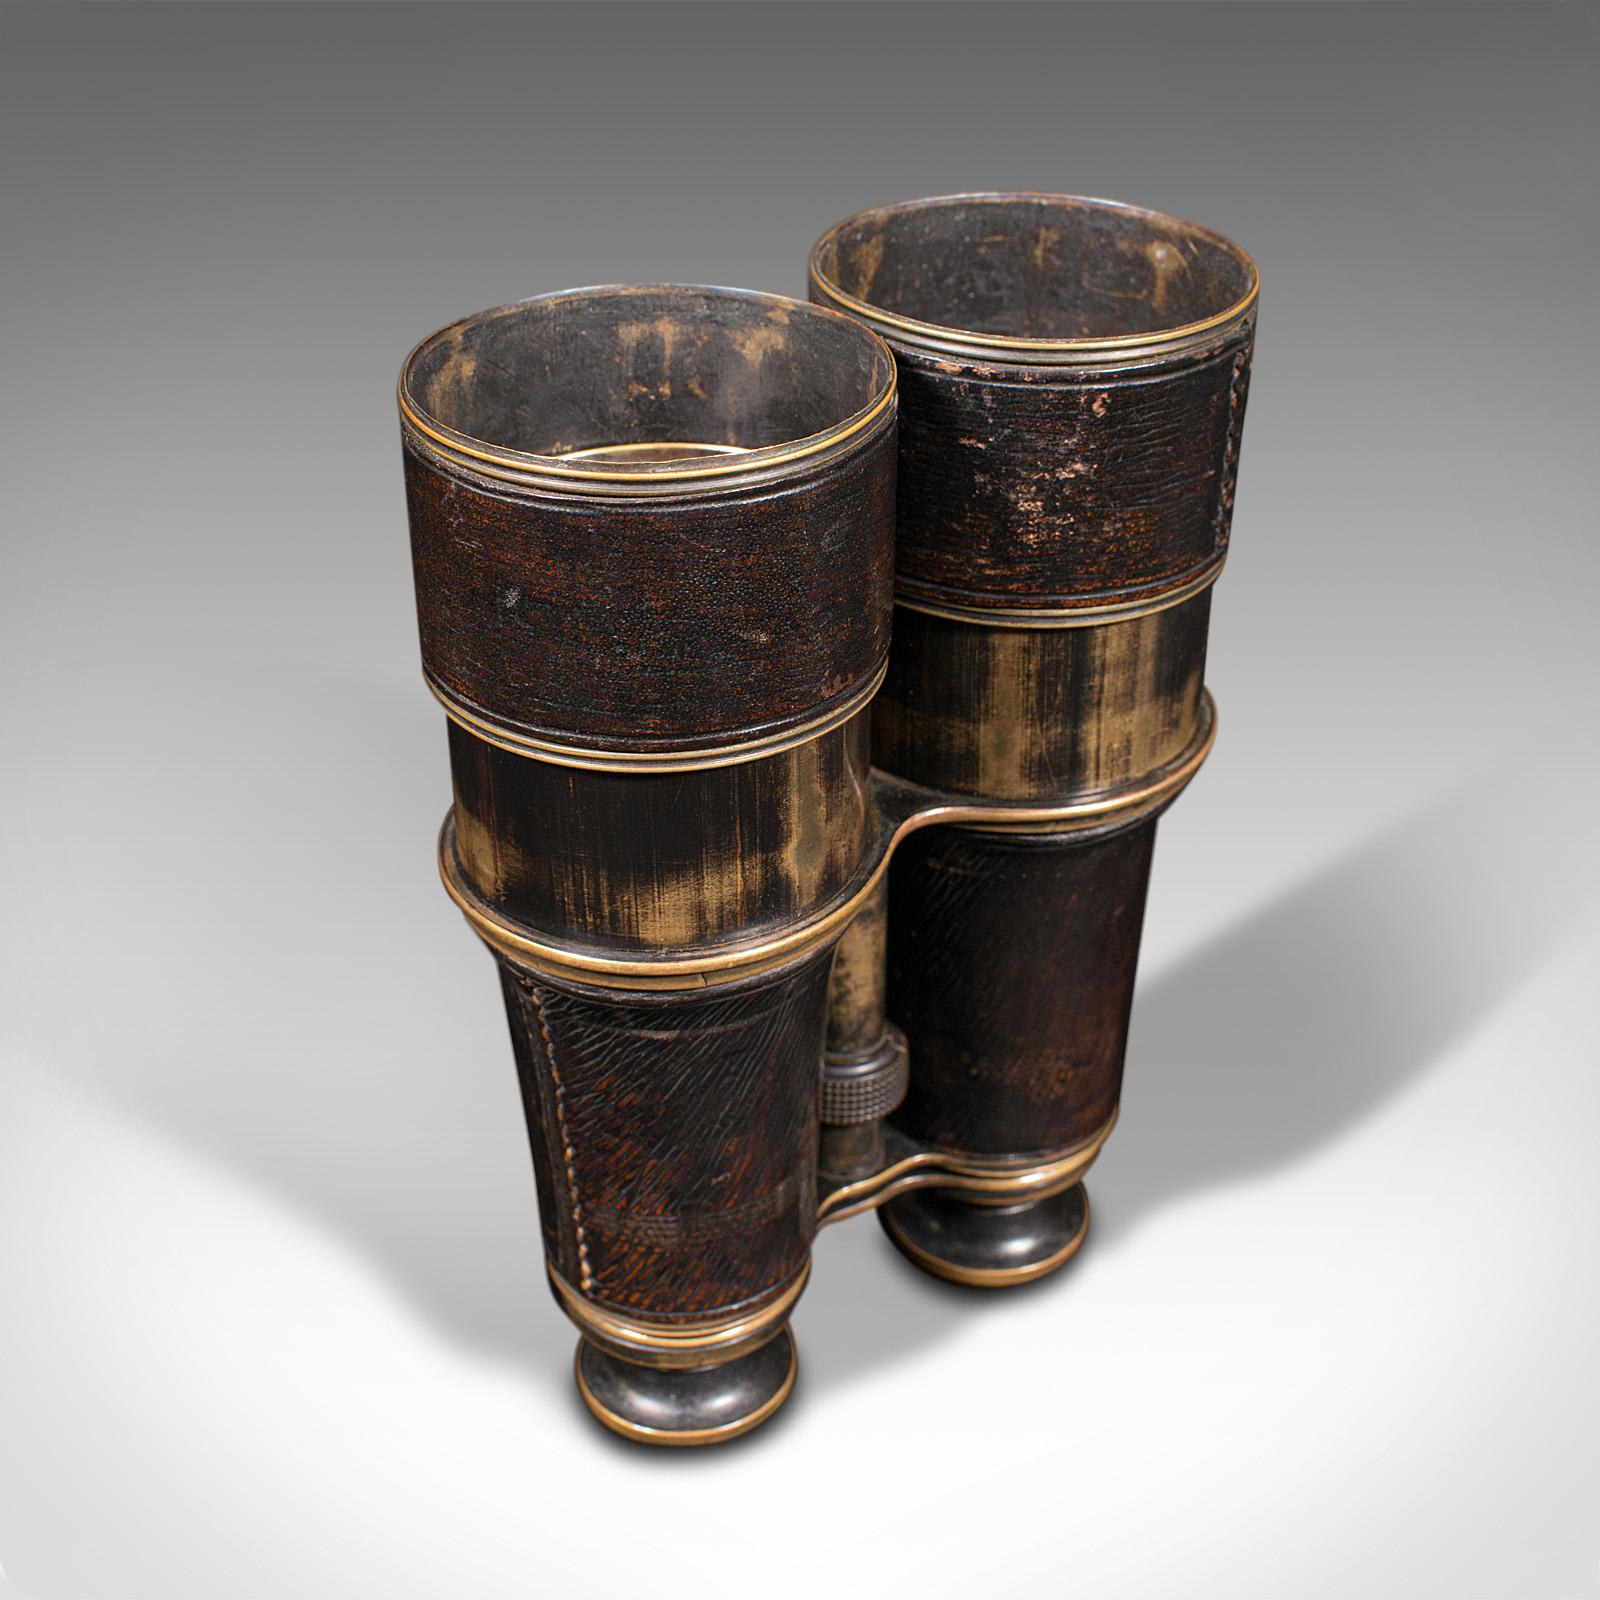 Pair of Antique Binoculars, English, Brass, Leather, Optical Instrument, c.1920 2